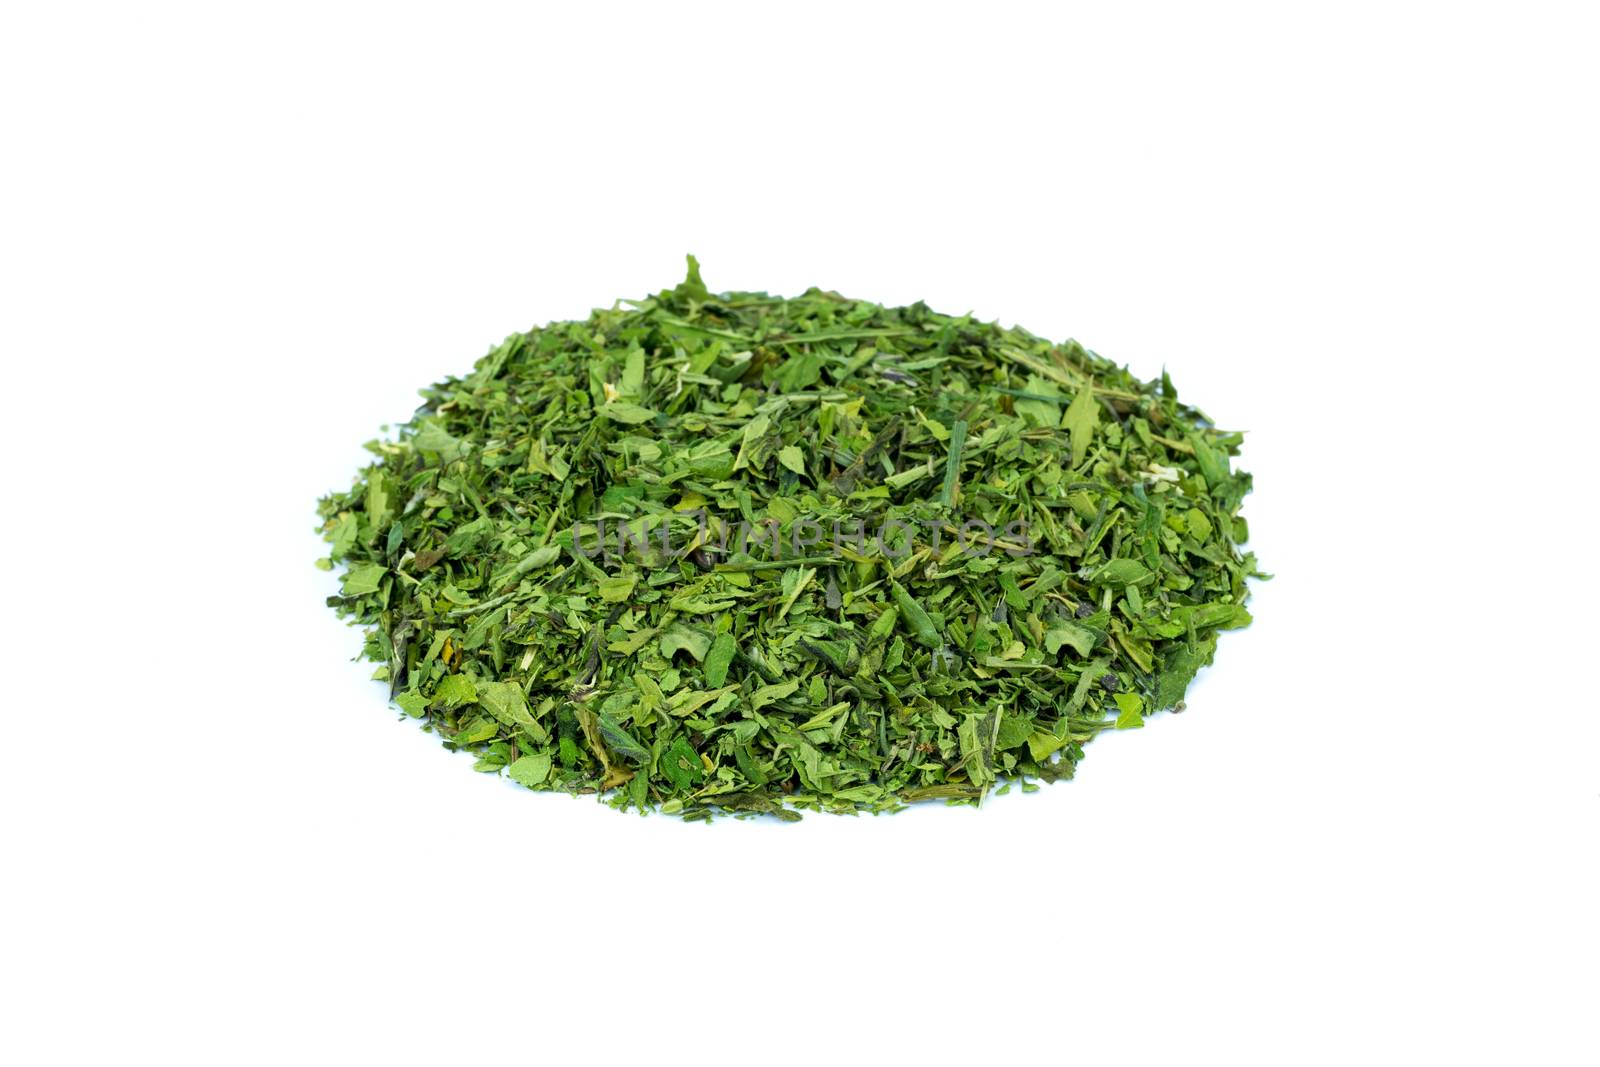 Heap of green hemp tea on white background by BenSchonewille